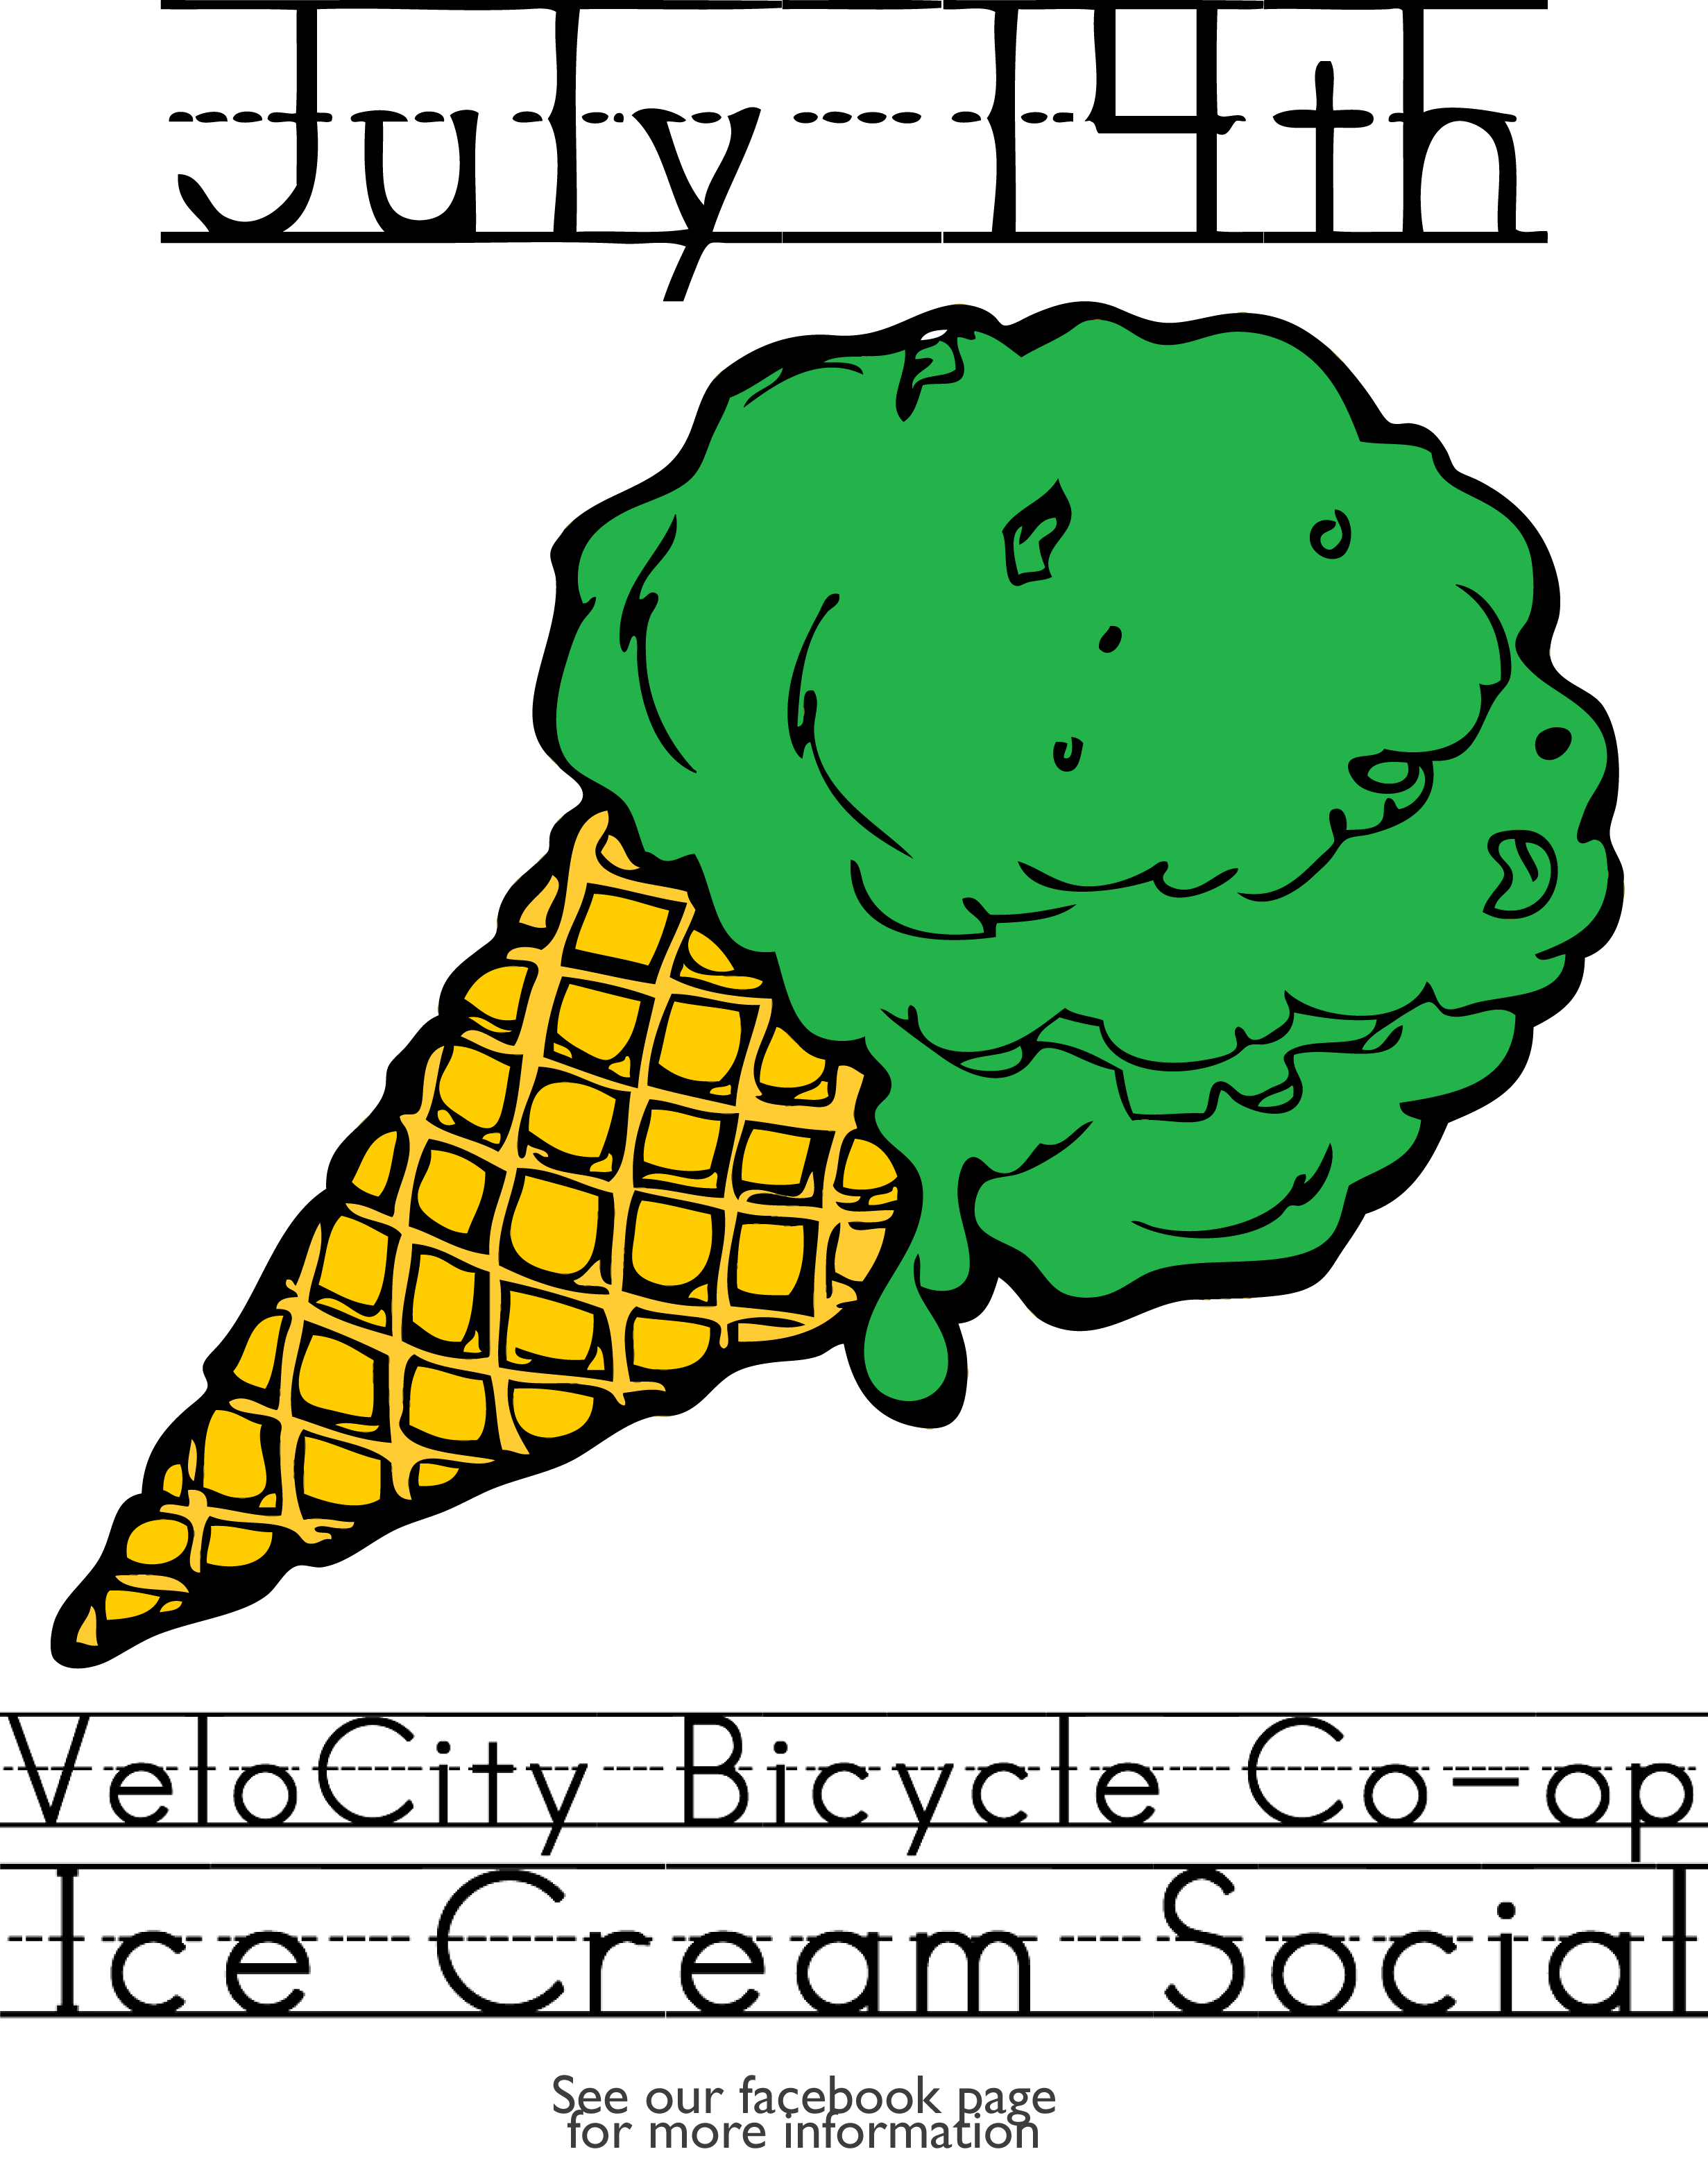 Ice Cream Social Template from velocitycoop.org